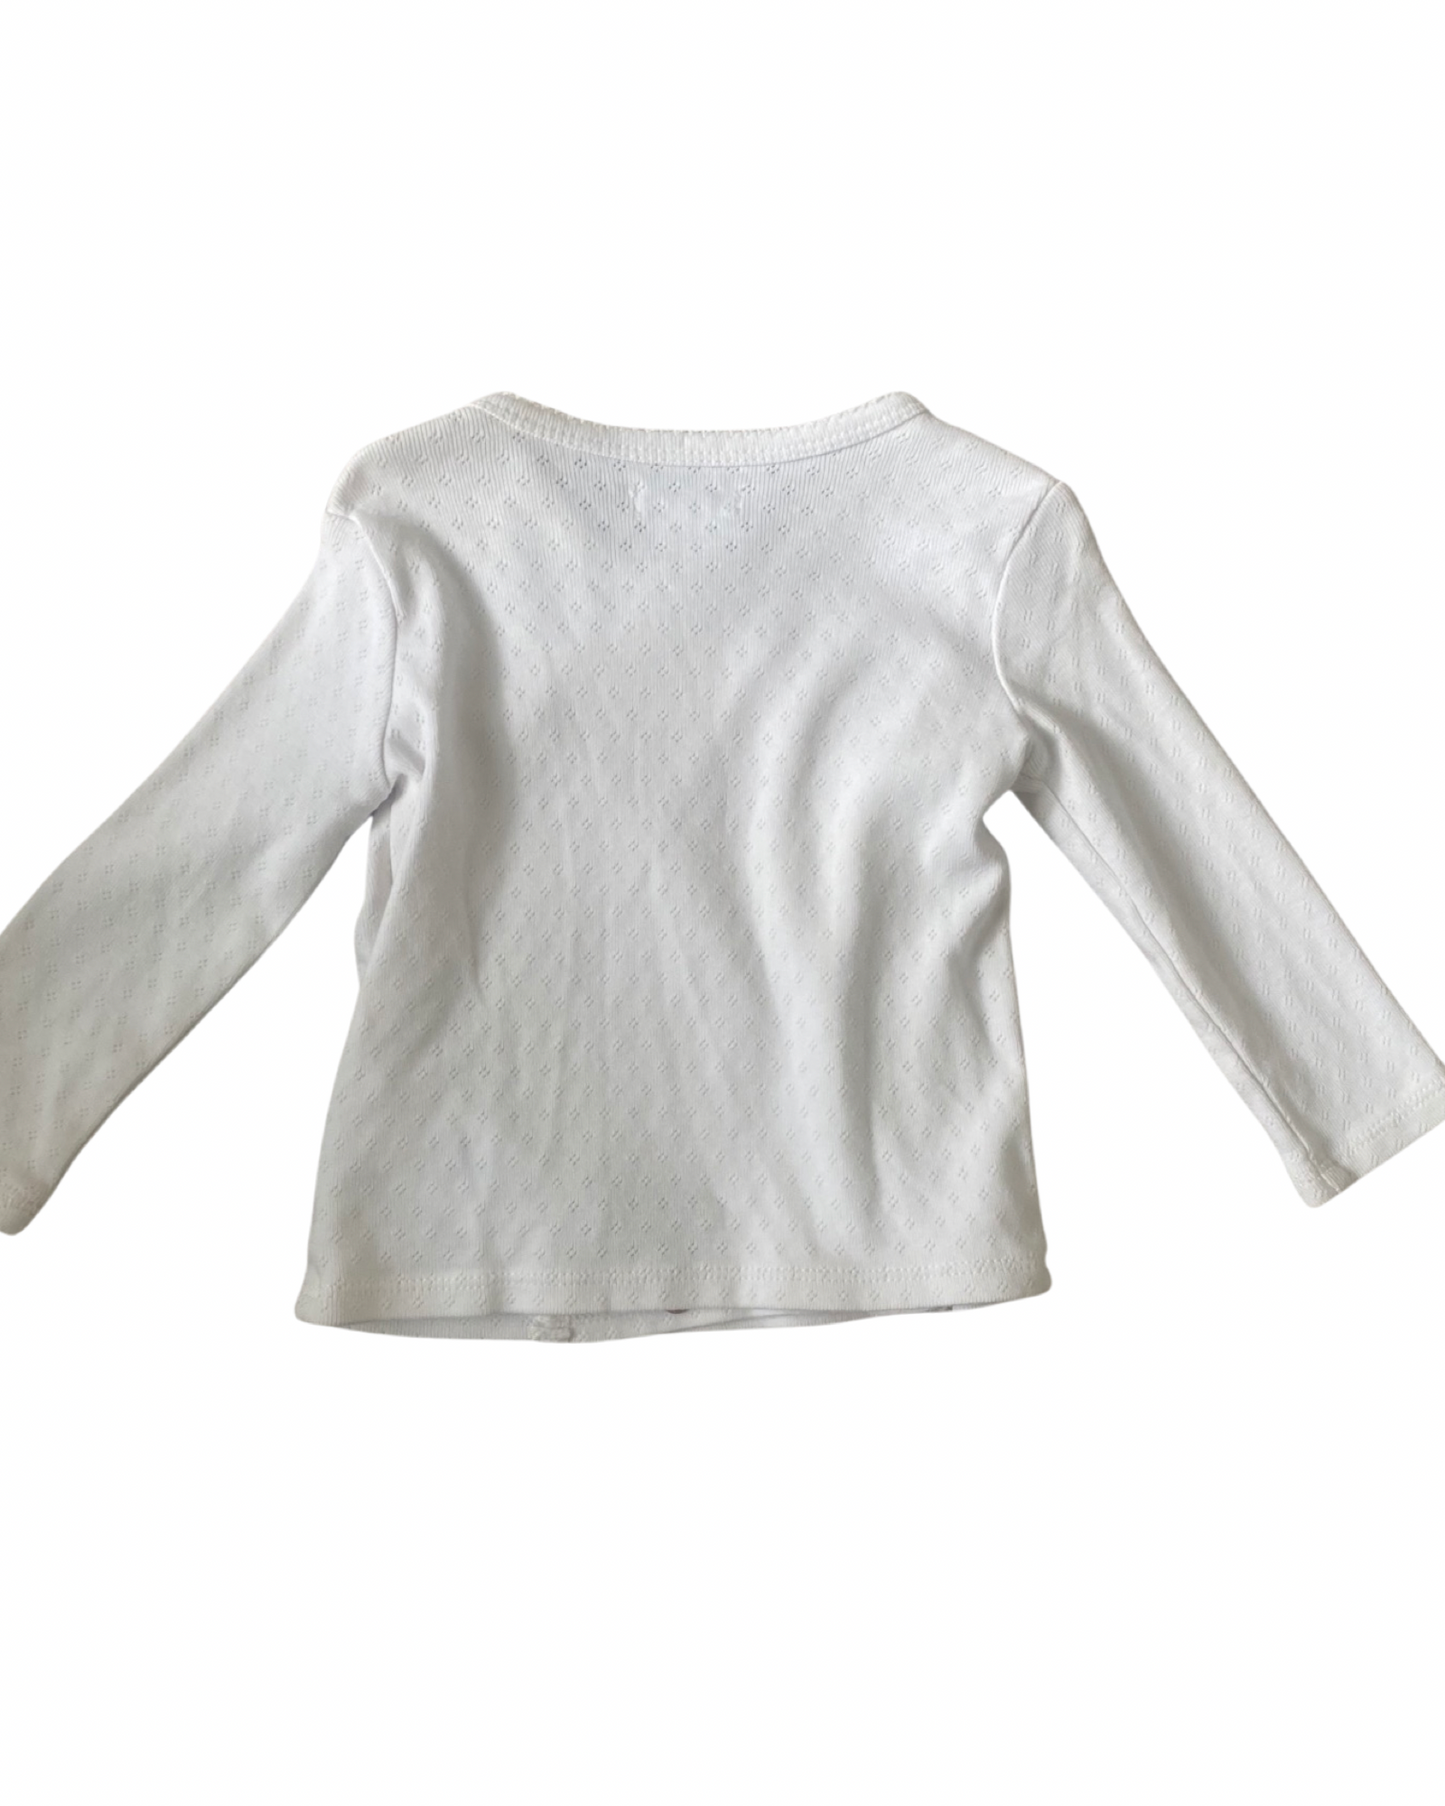 Ralph Lauren cream pointelle knit top (size 6-9mths)